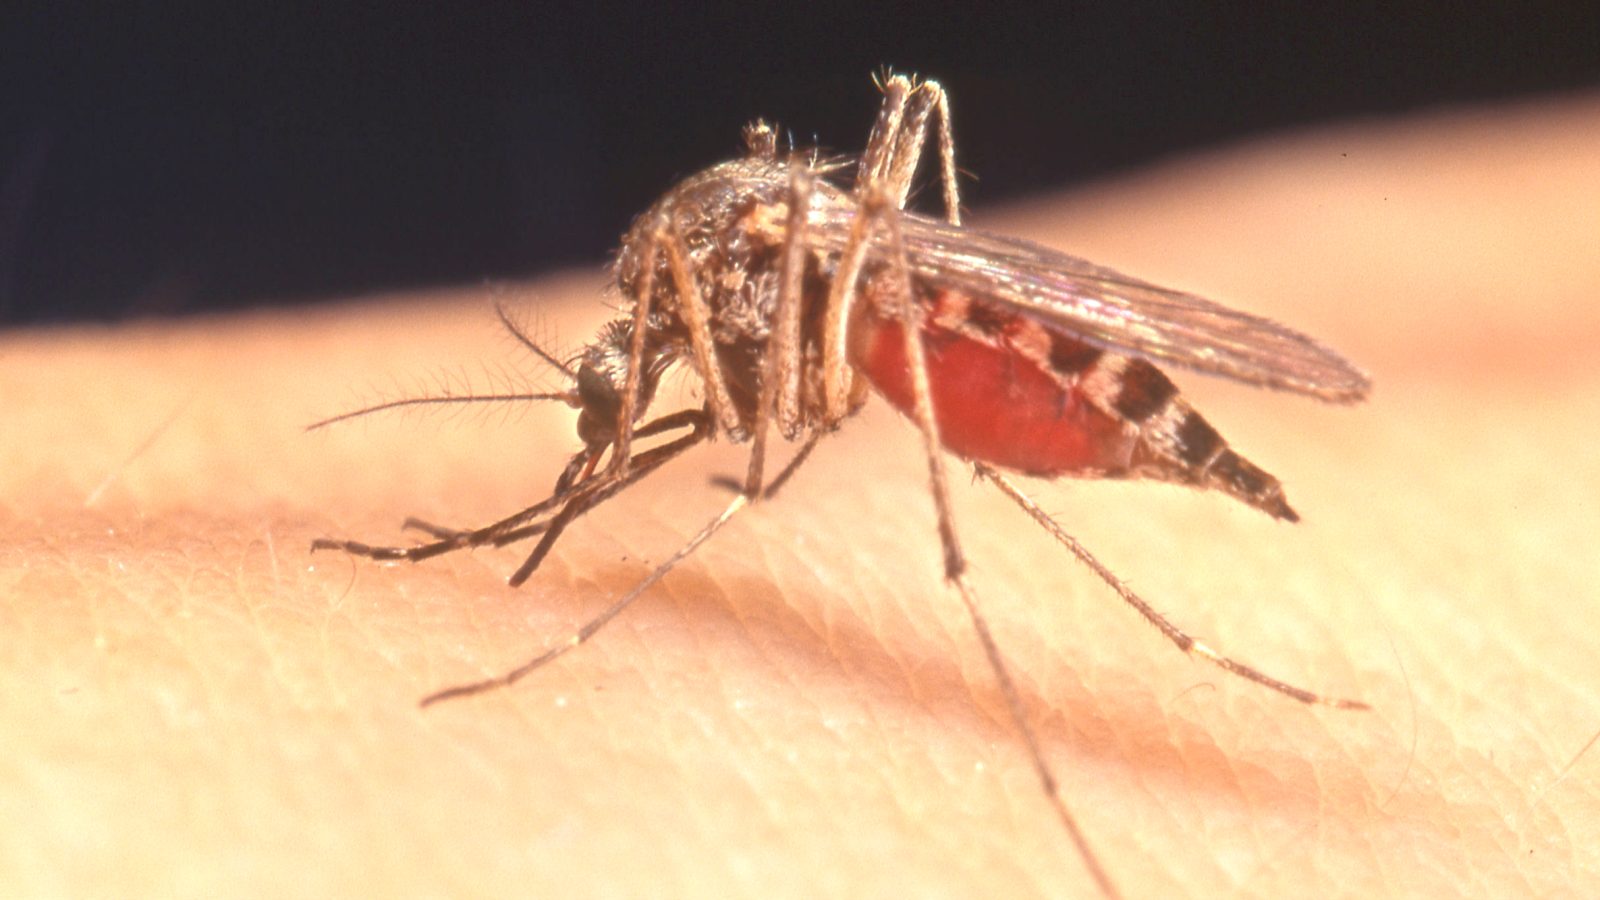 West Nile virus season warning